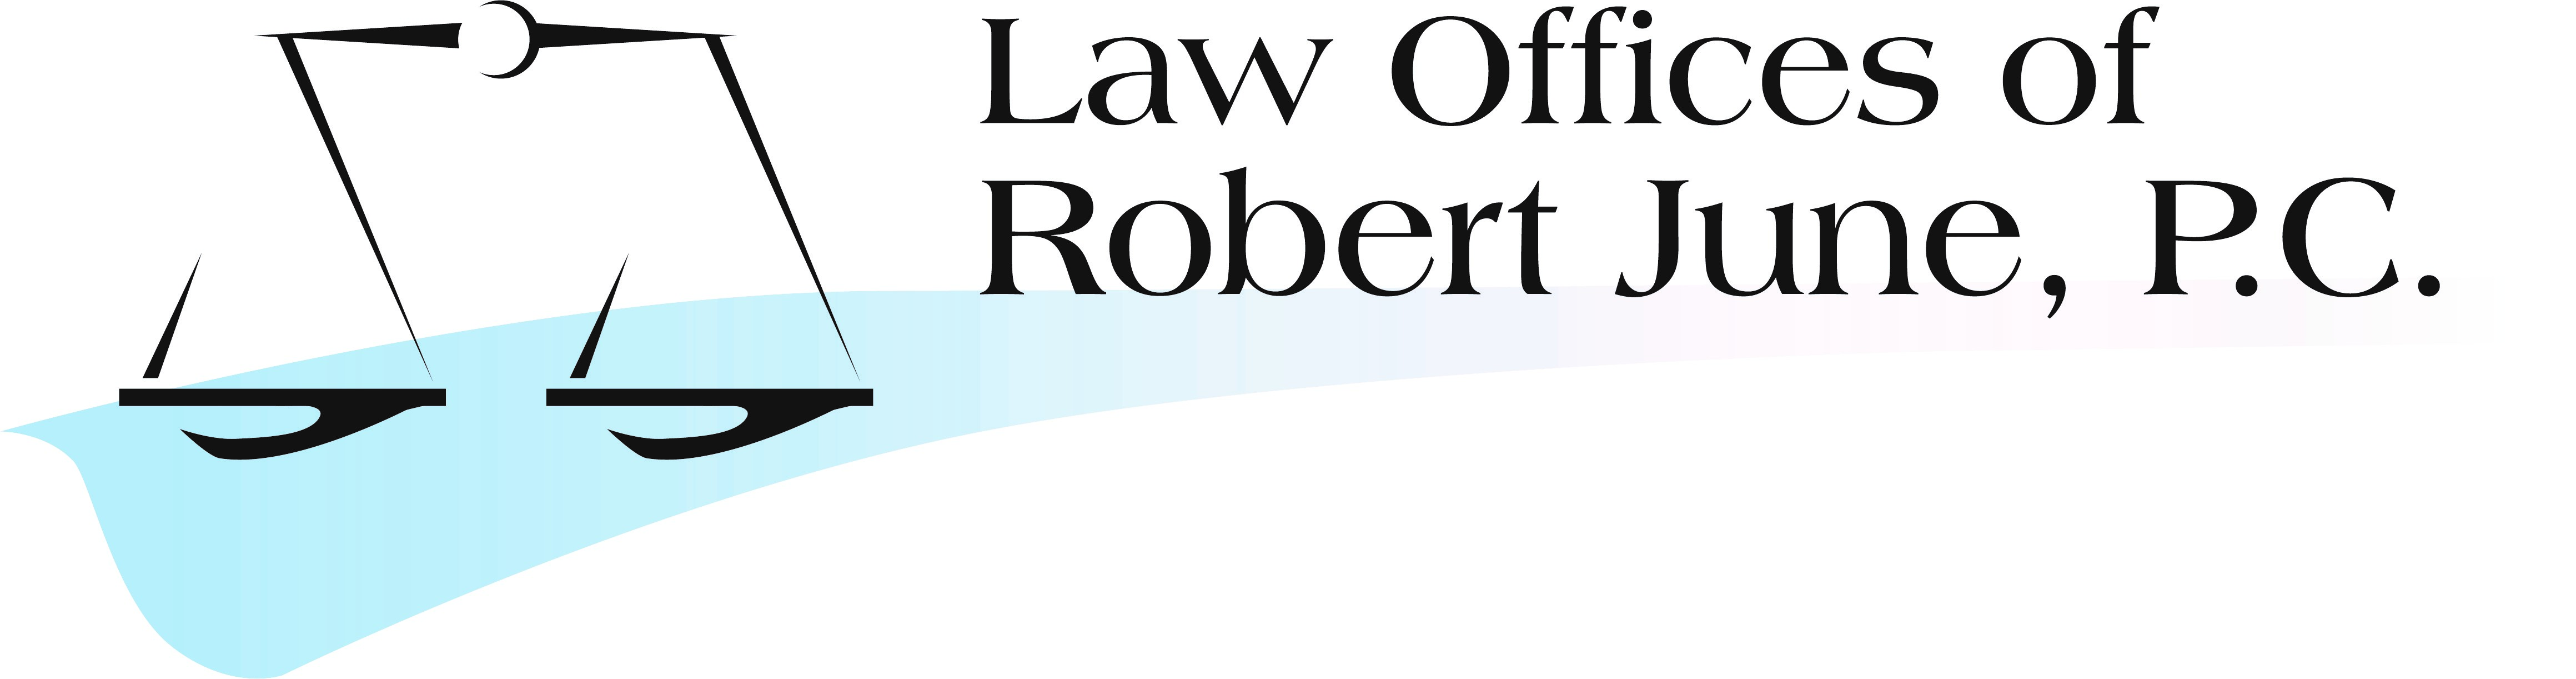 Law Offices of Robert June, P.C.